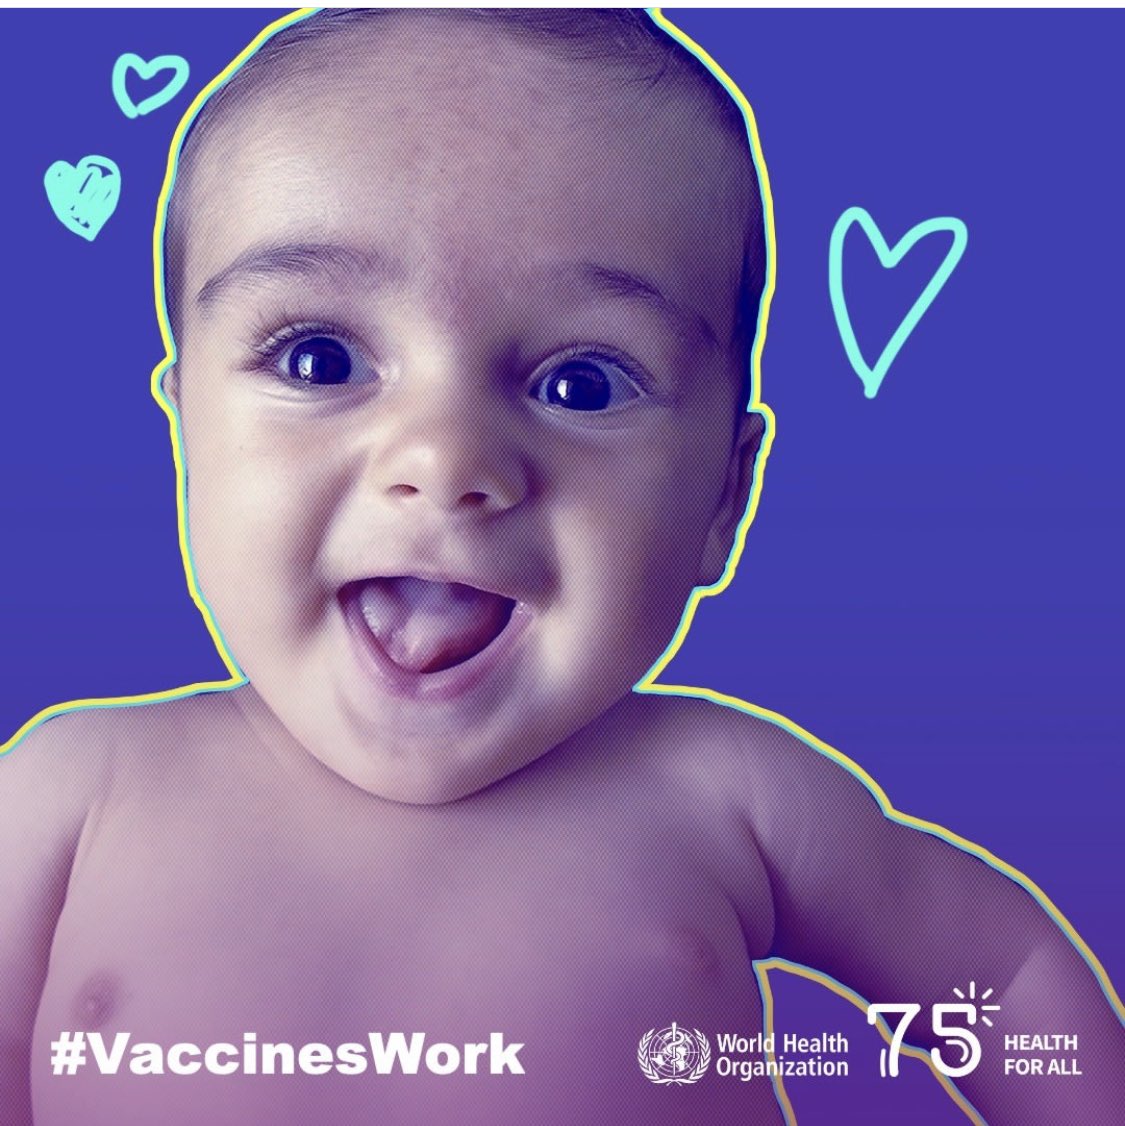 Bottom line: #VaccinesWork